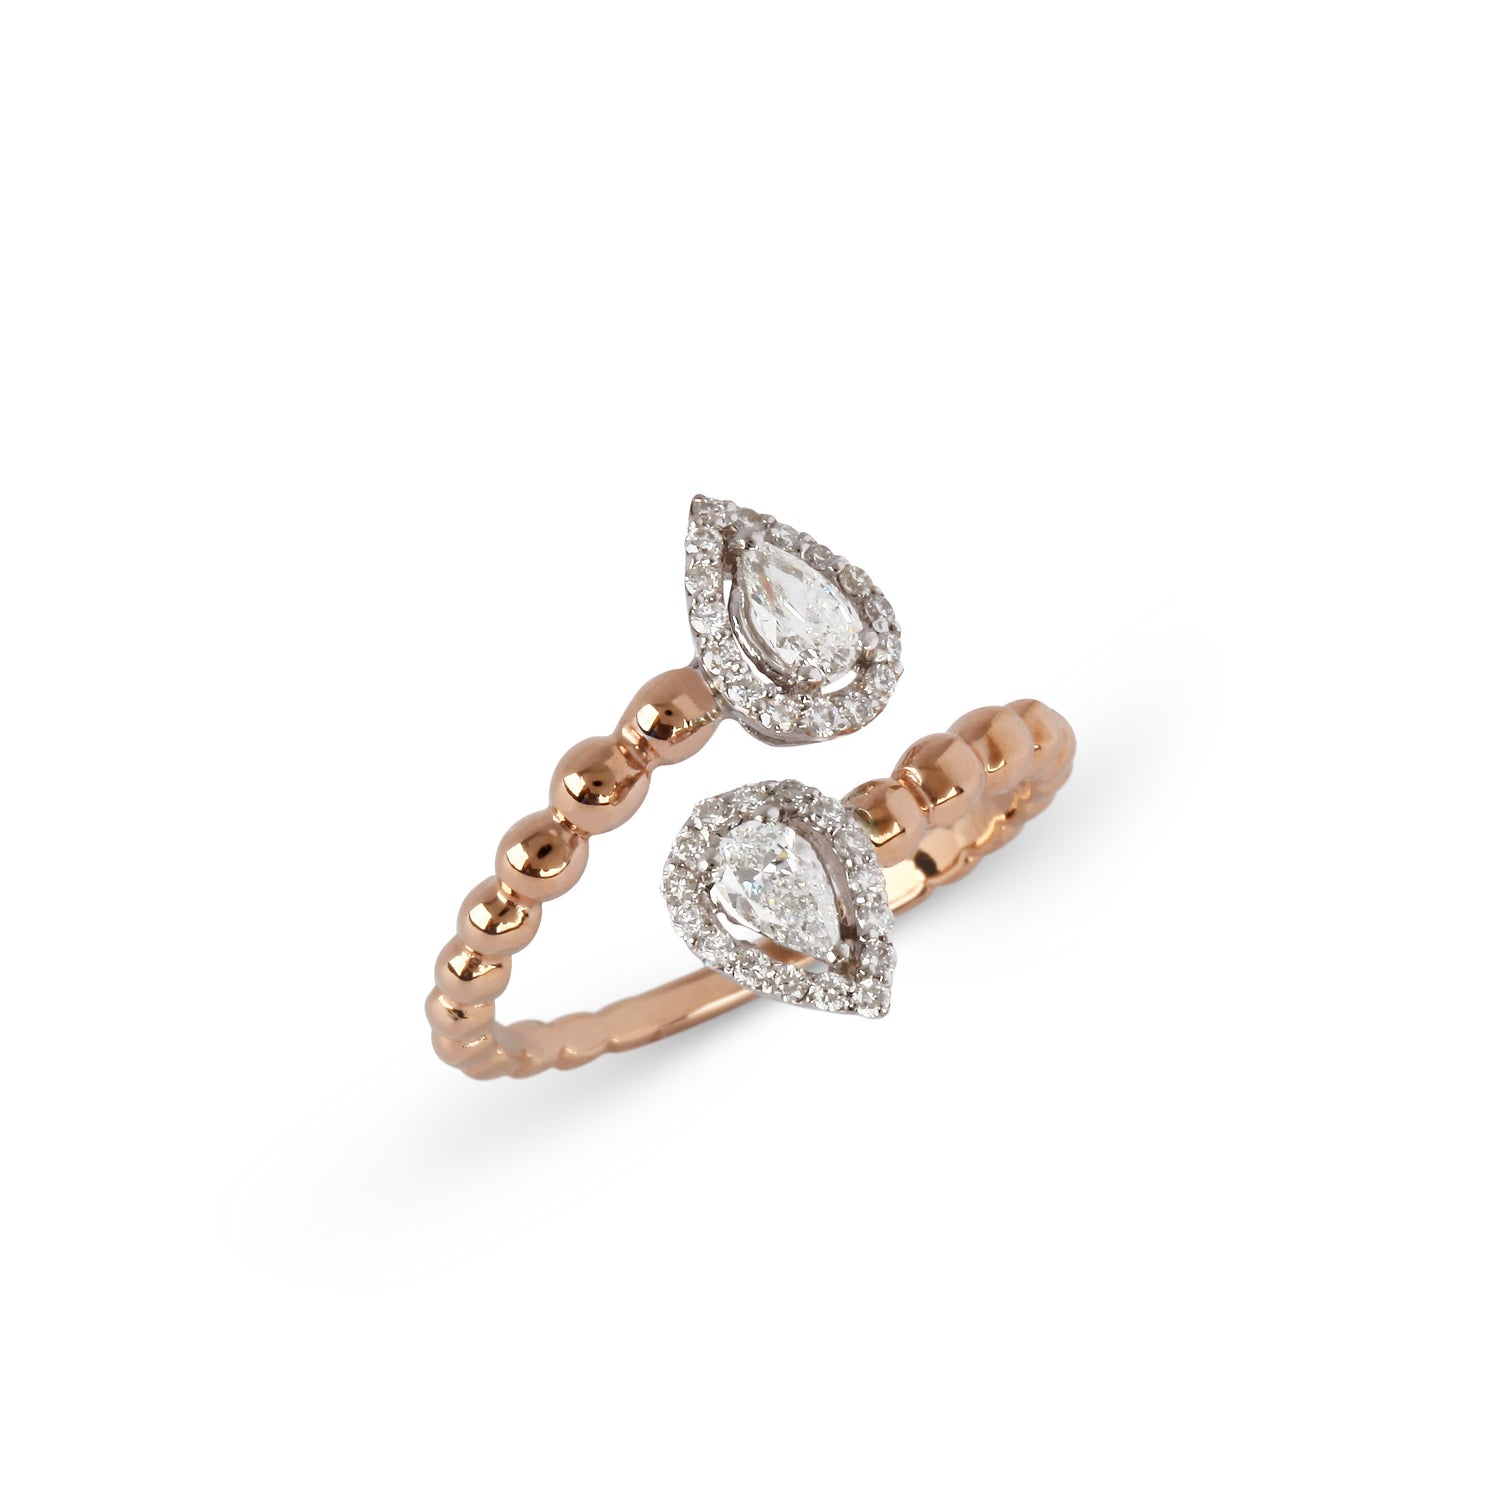 Two-Tone Double Pear Diamond Beaded Ring | jewellery store | diamond rings